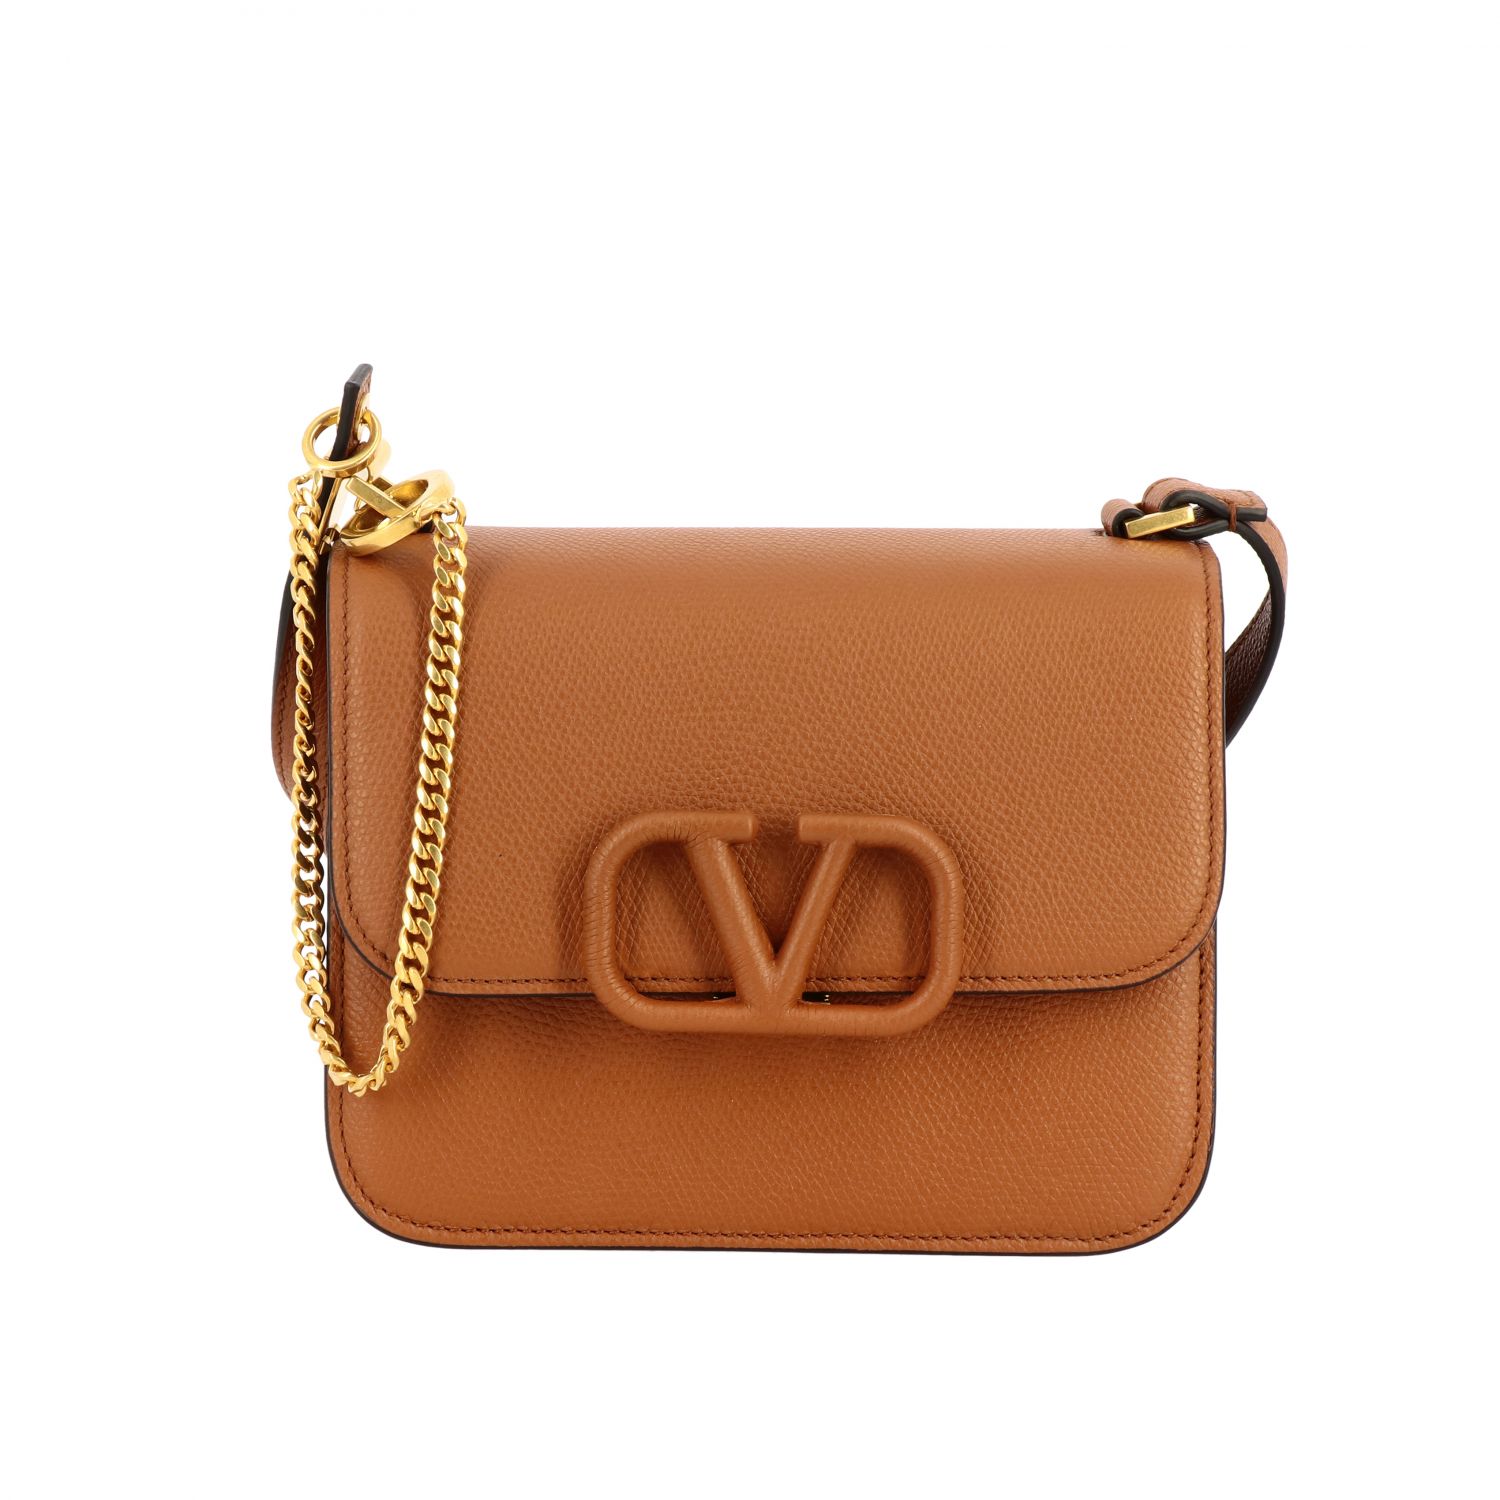 VALENTINO GARAVANI: V sling bag in grained leather - Camel  Valentino  Garavani mini bag TW2B0F01 RQR online at